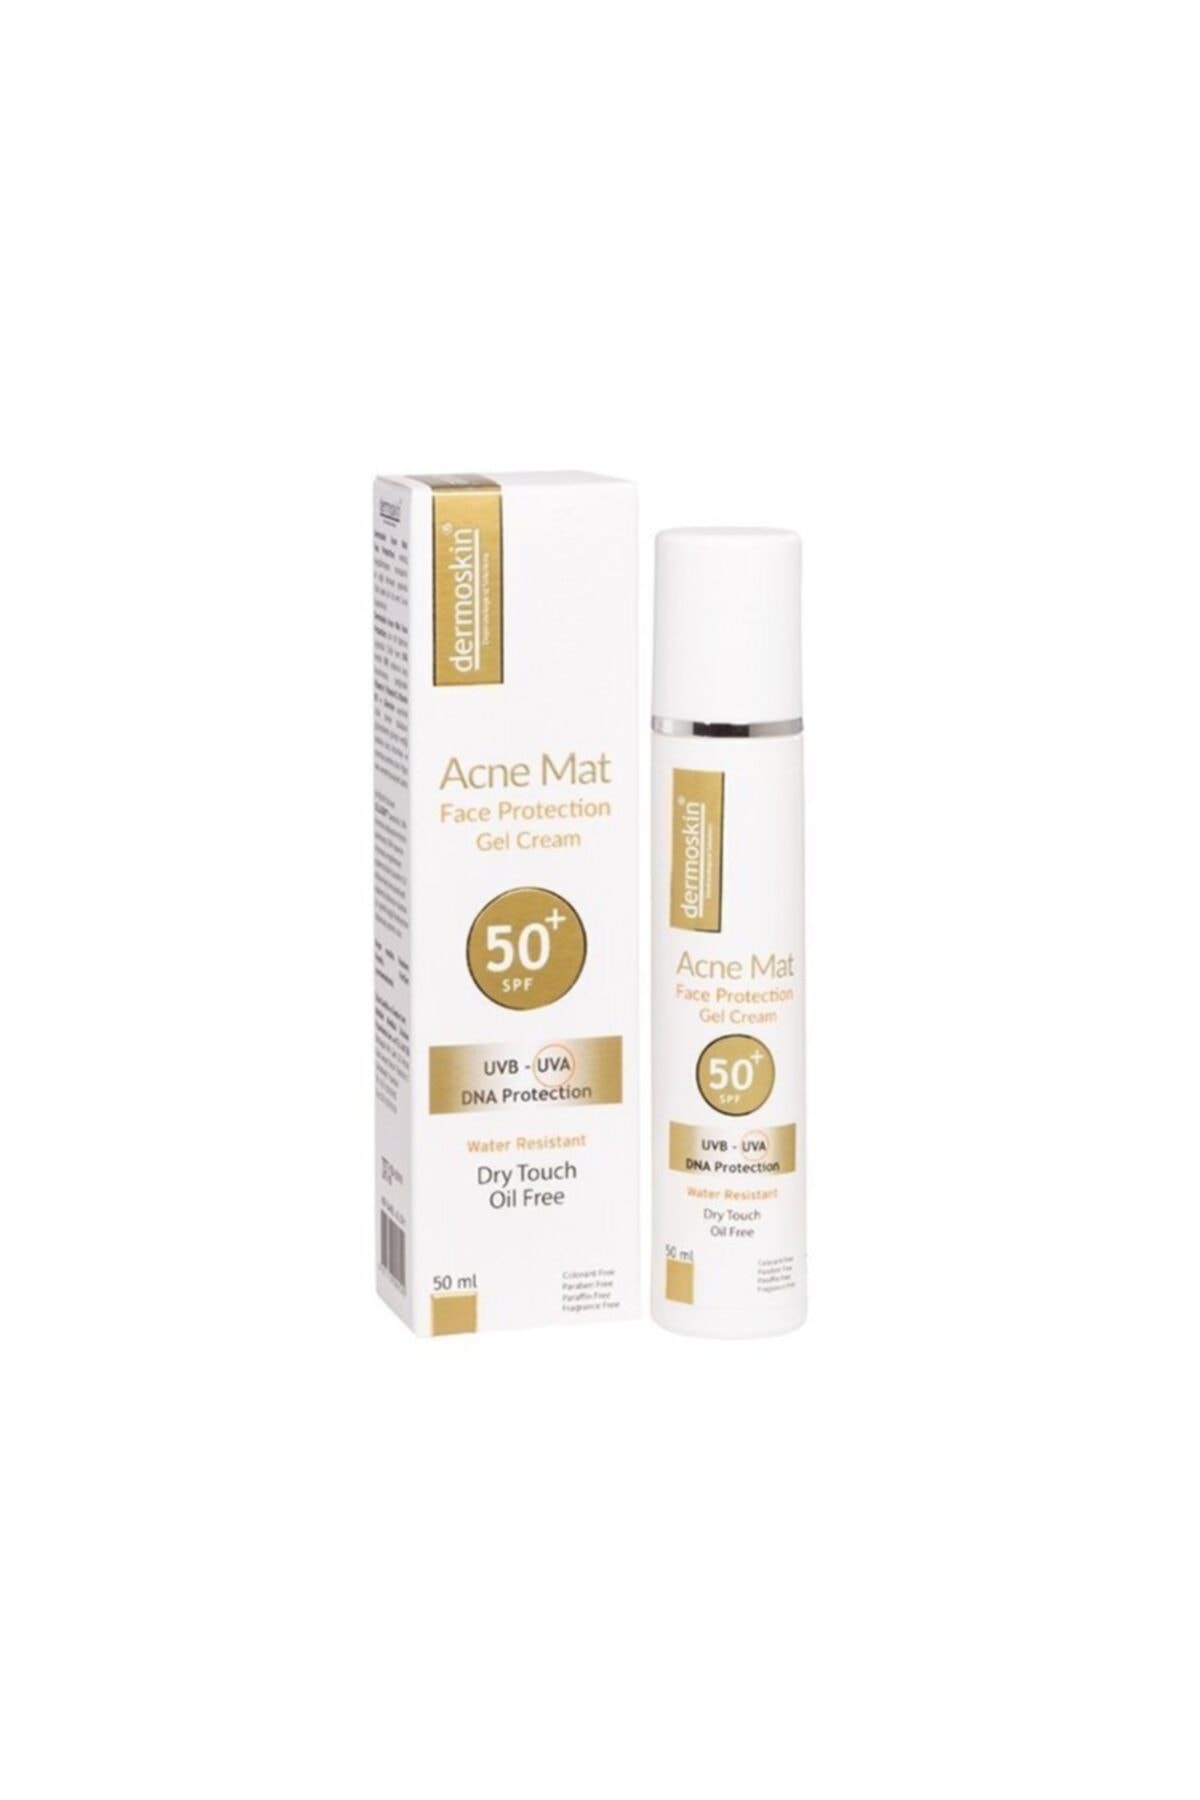 Dermoskin Acne Mat Face Protection Gel Cream Spf50+ 50ml